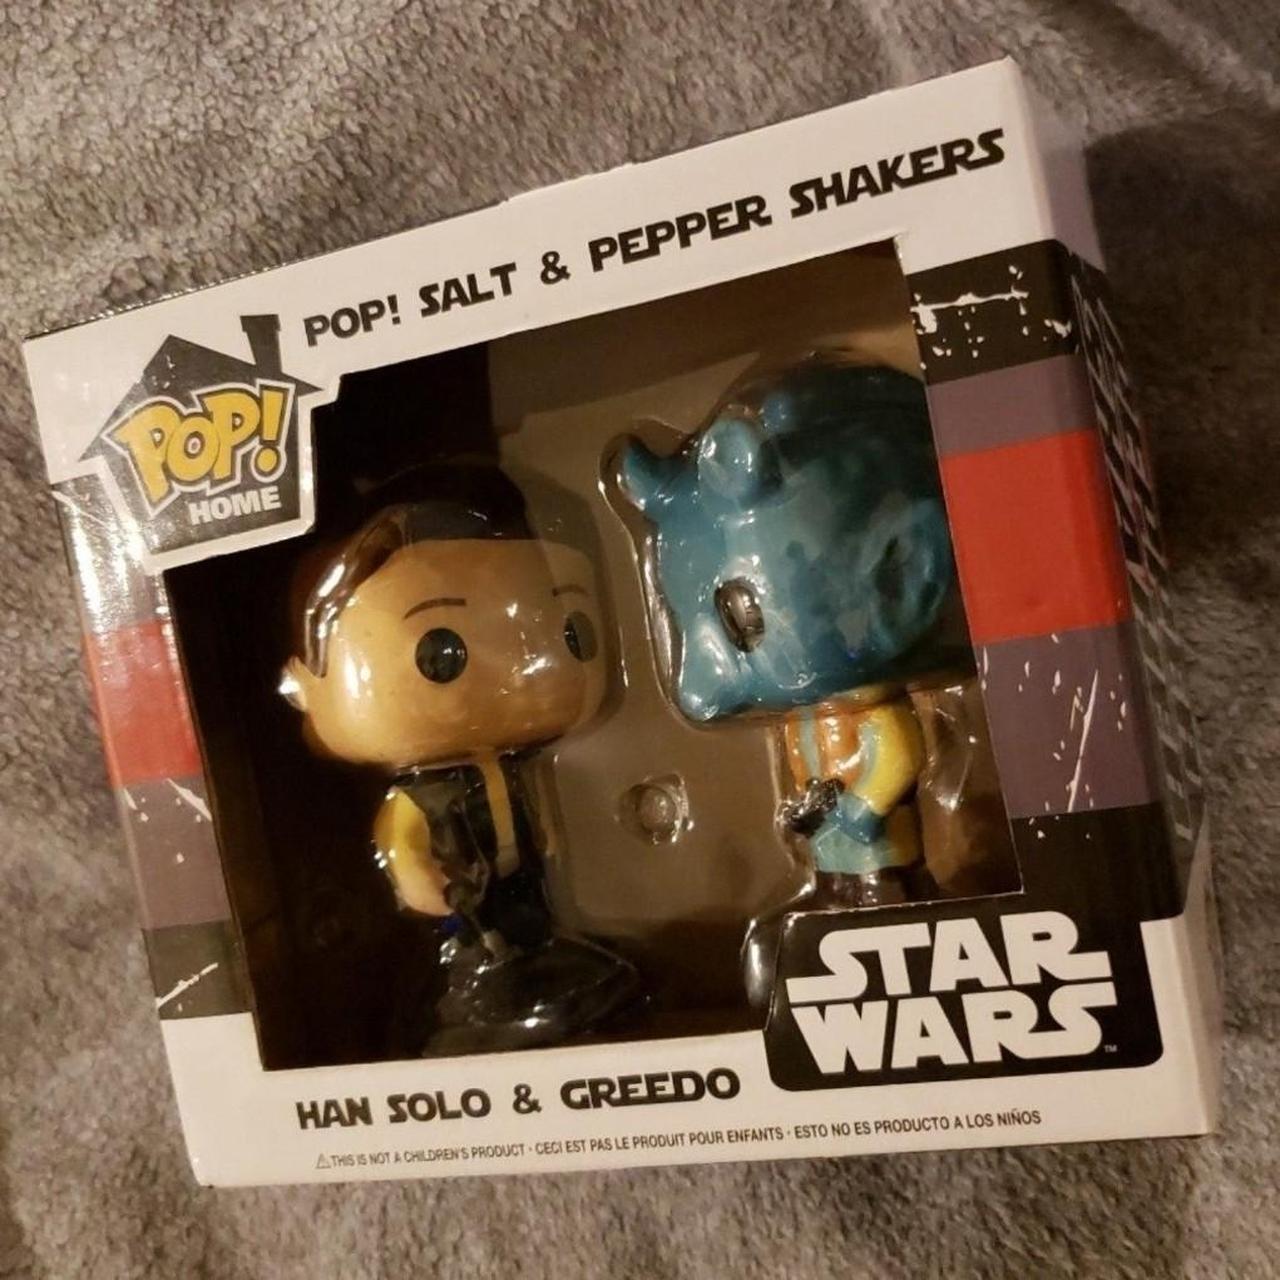 Funko Pop Home Star Wars Han Solo & Greedo Salt & Pepper Shakers Brand  NEW!!!